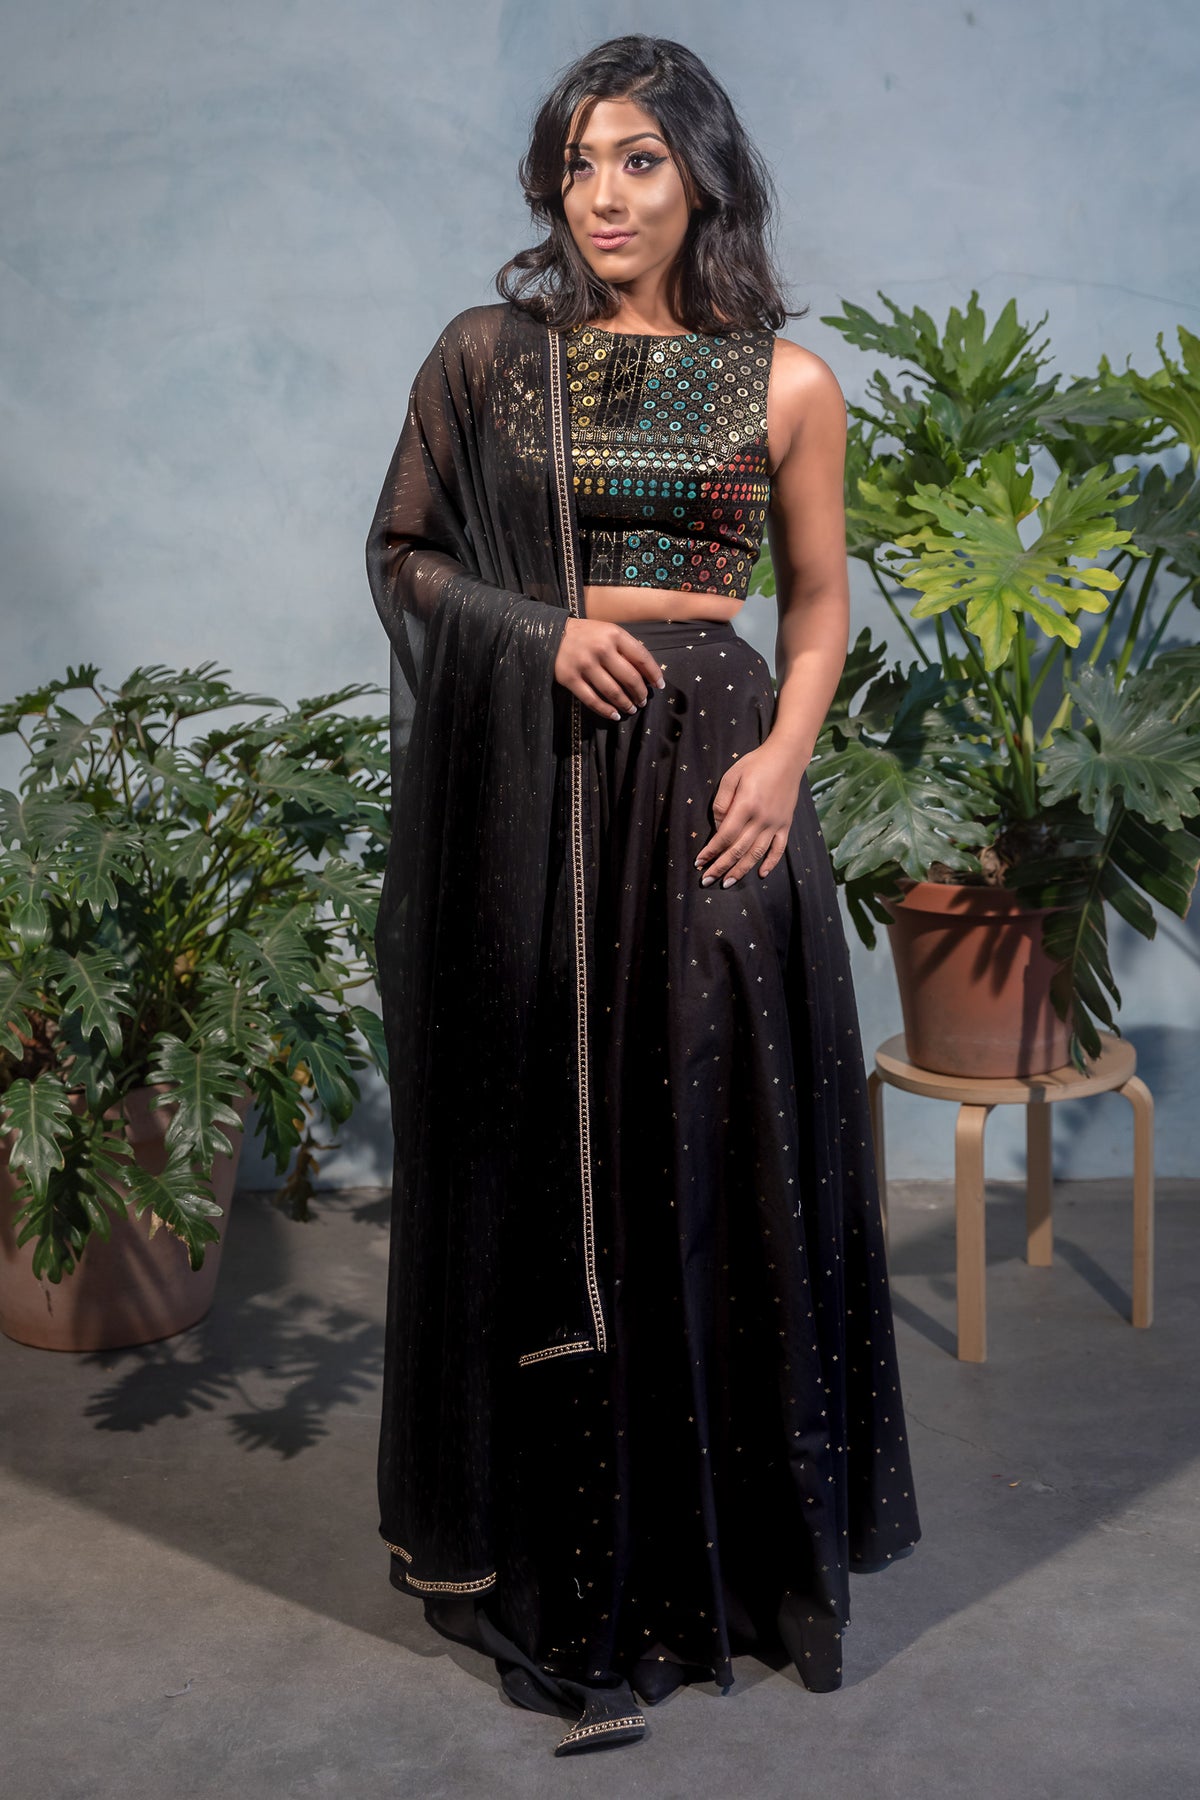 RINA Black Dupatta with Gold Trim - Front View - Harleen Kaur - South Asian Womenswear